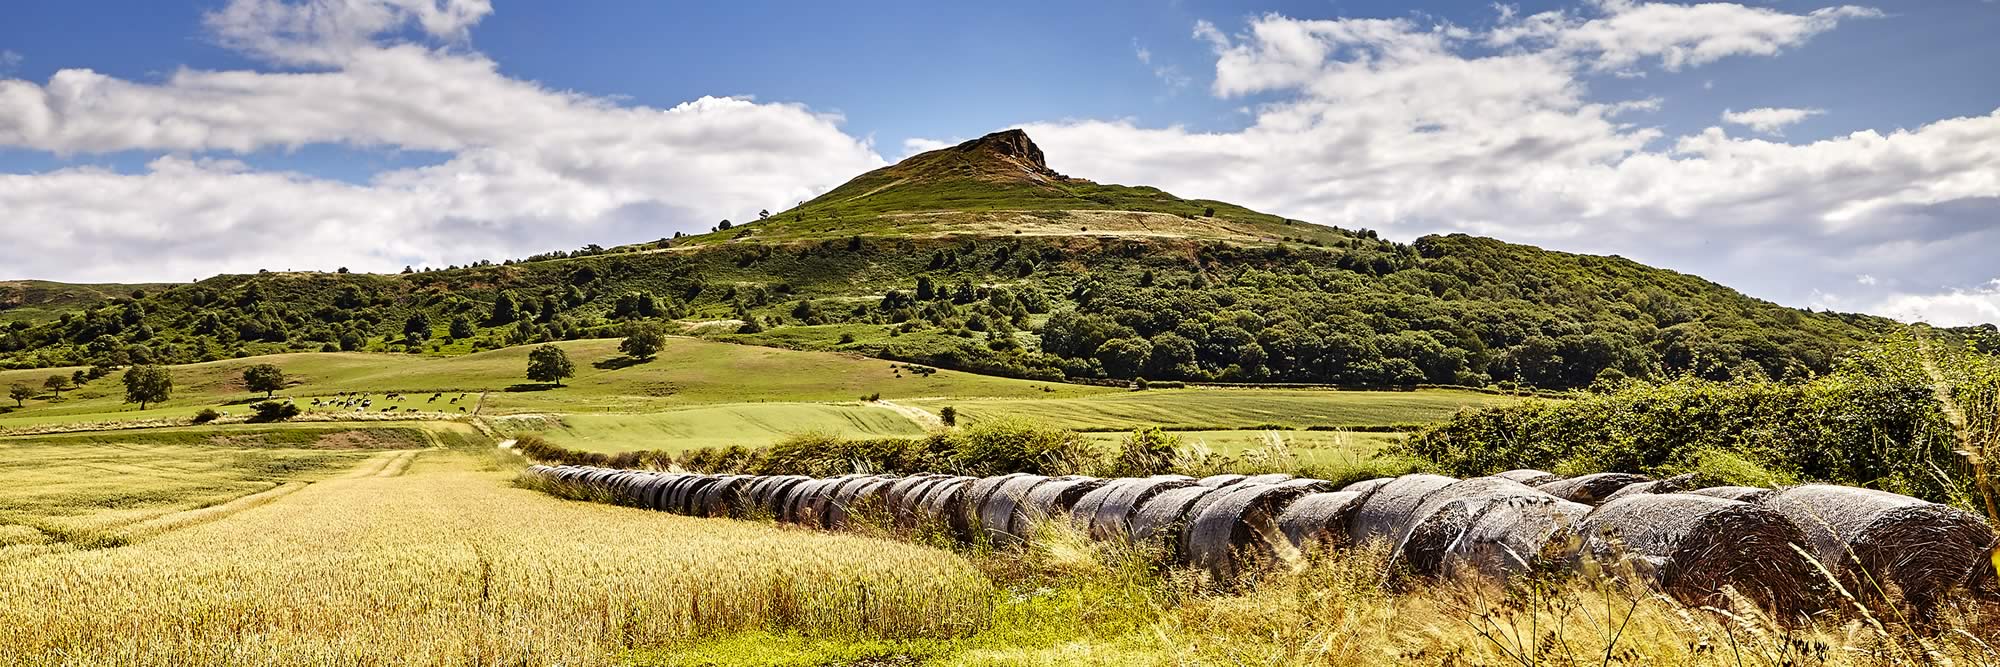 A triangular hill rising from farm fields